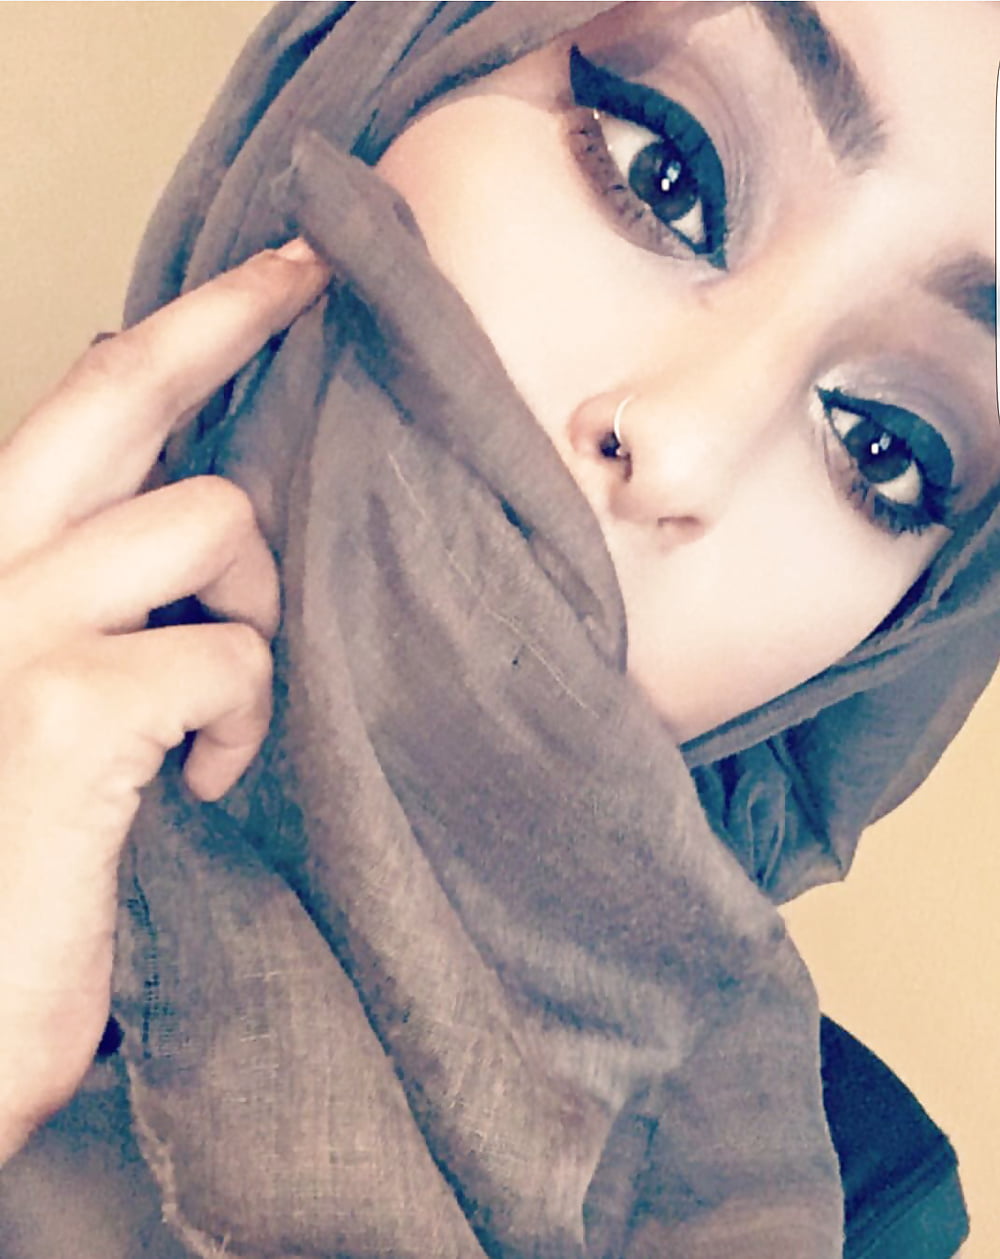 Beurette arab hijab muslim 30 pict gal